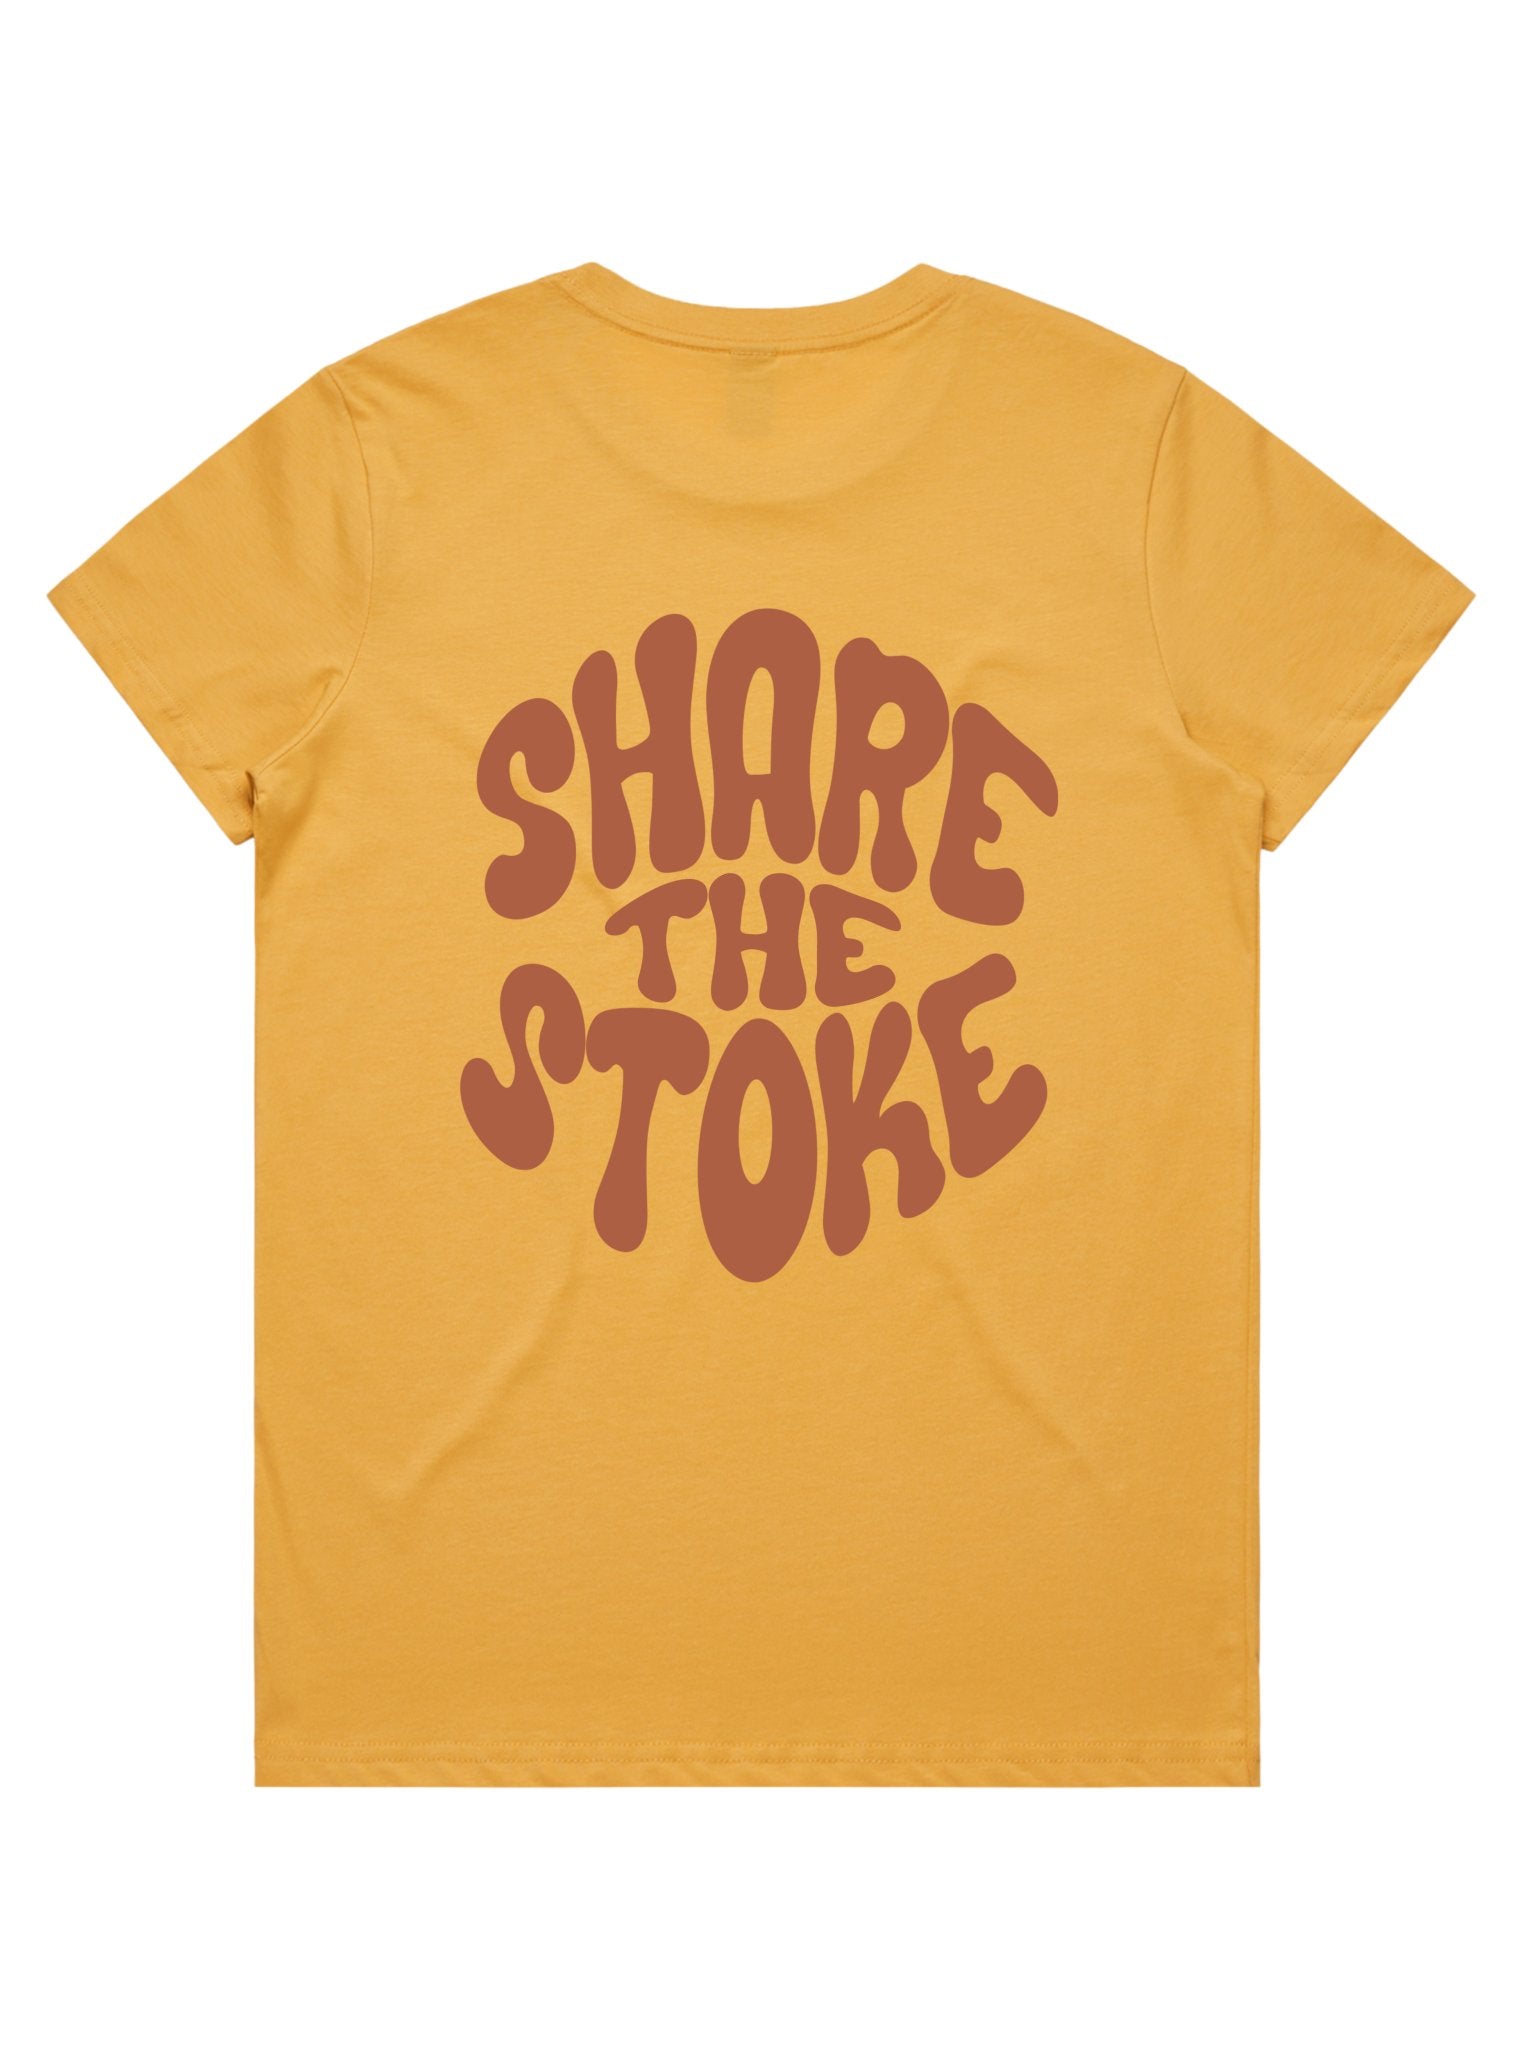 Share Stoke Tee | Mustard - Shred Like a Girl